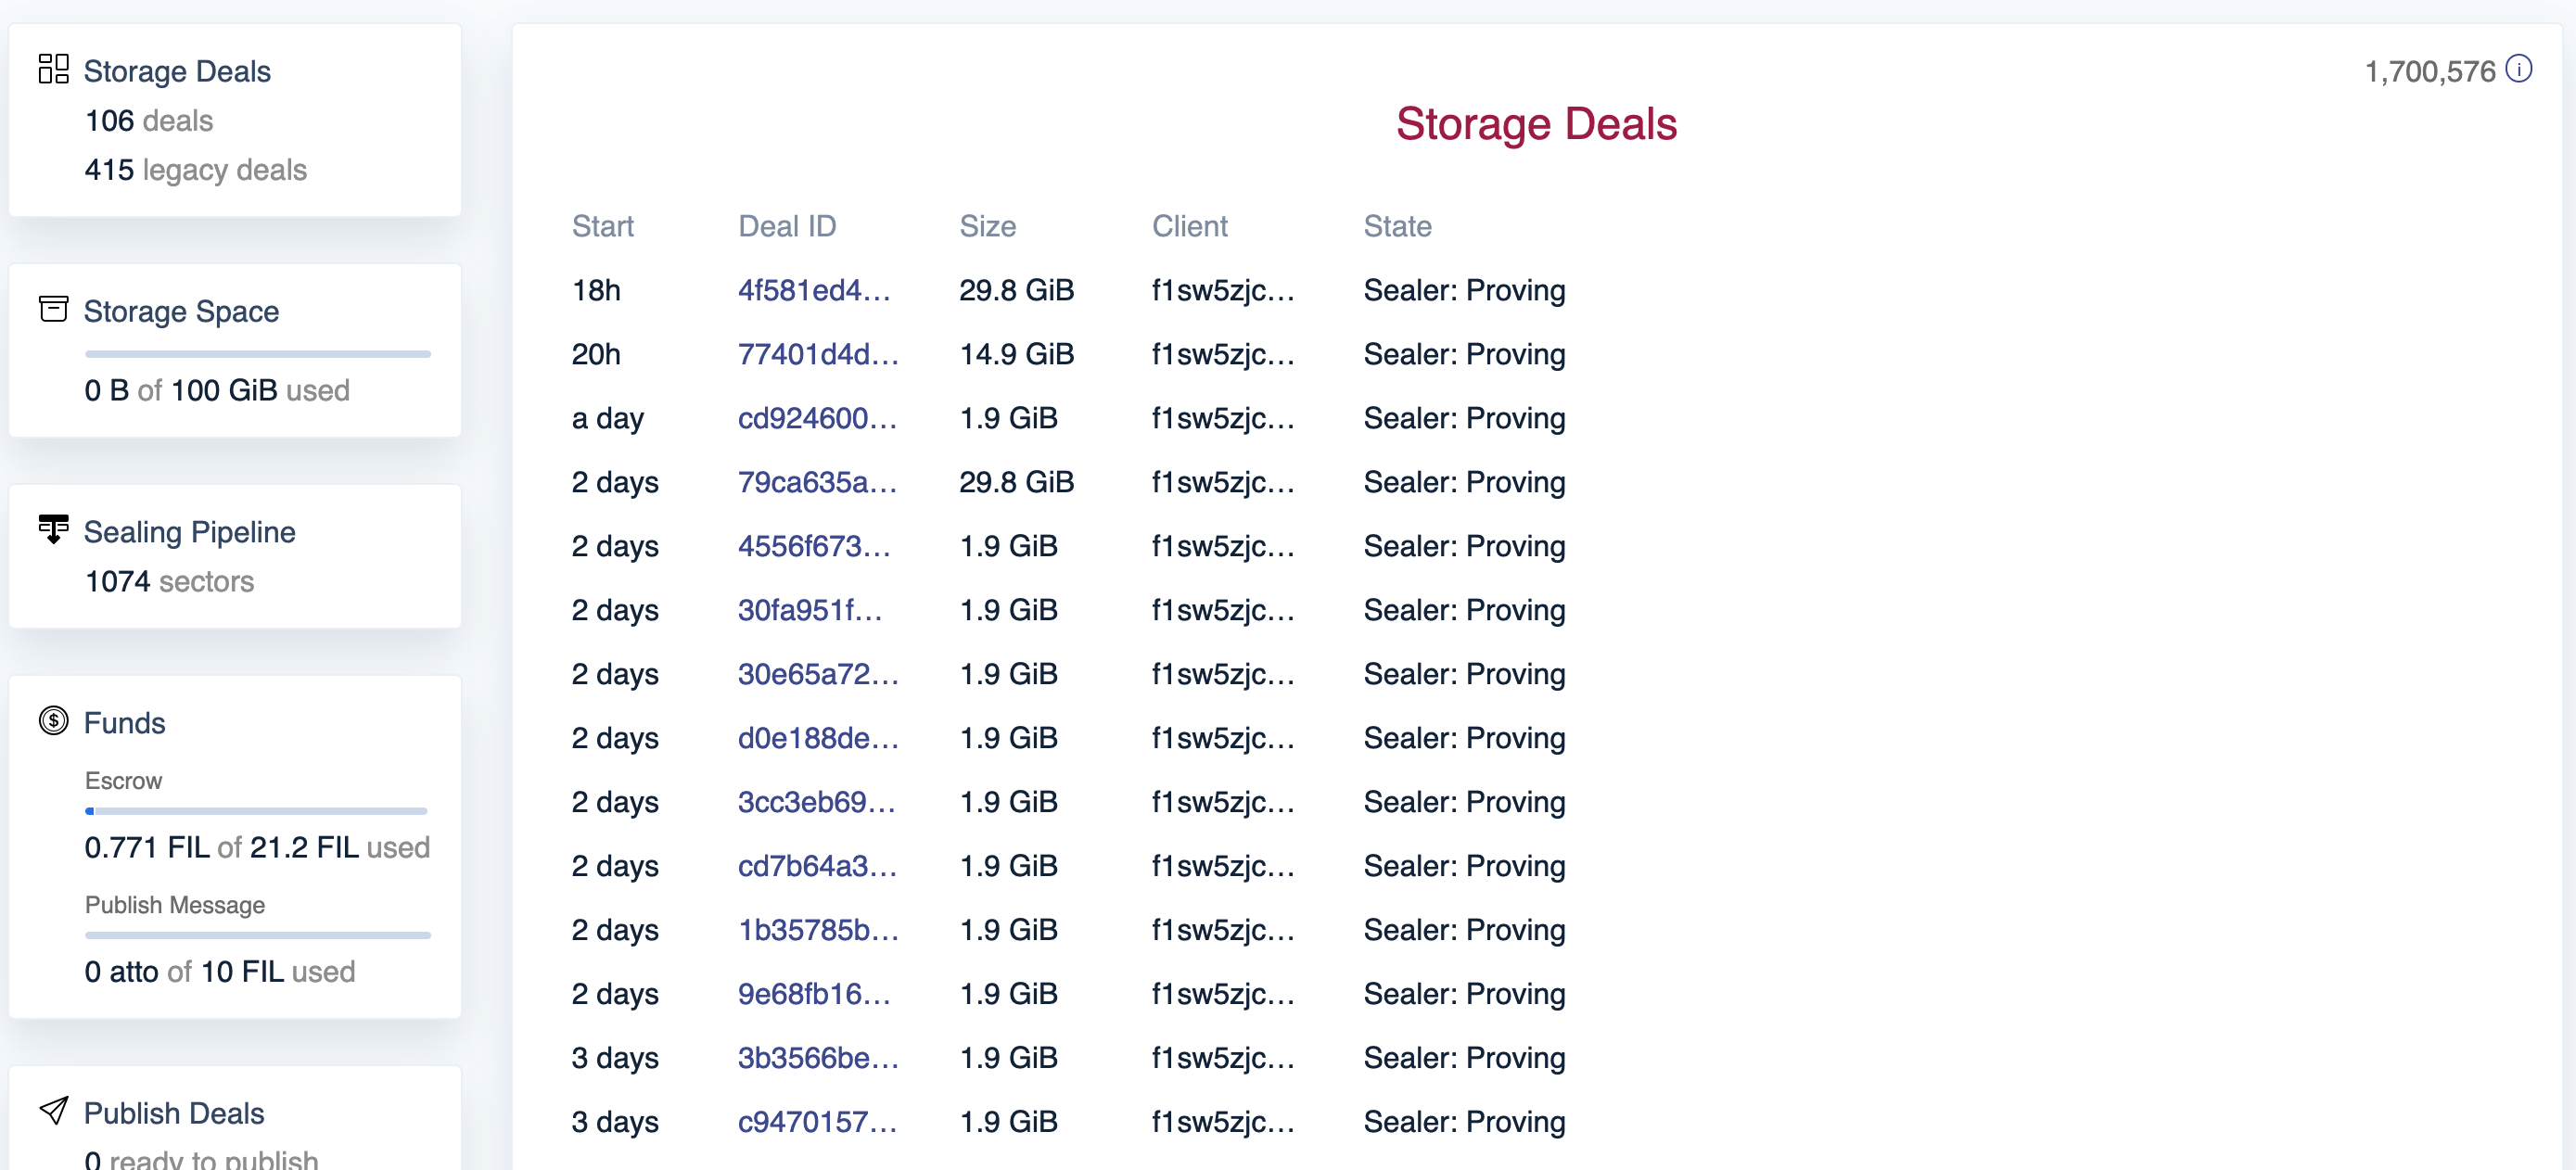 Web UI - Storage Deals screen